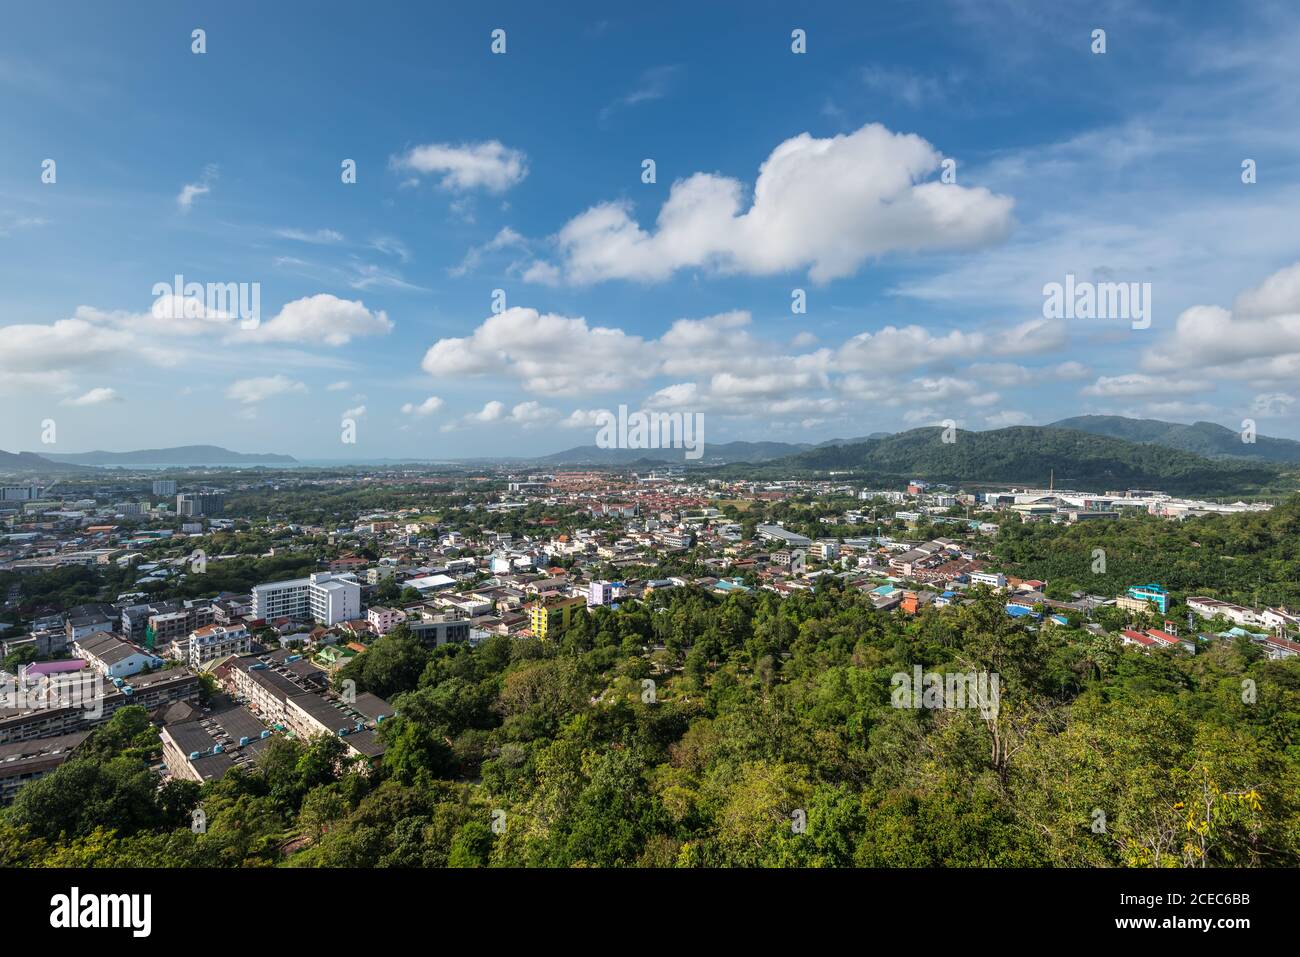 Phuket, Thailand - November 29, 2019: High view from the top of Rang Hill Viewpoint in Phuket island, Thailand. Stock Photo